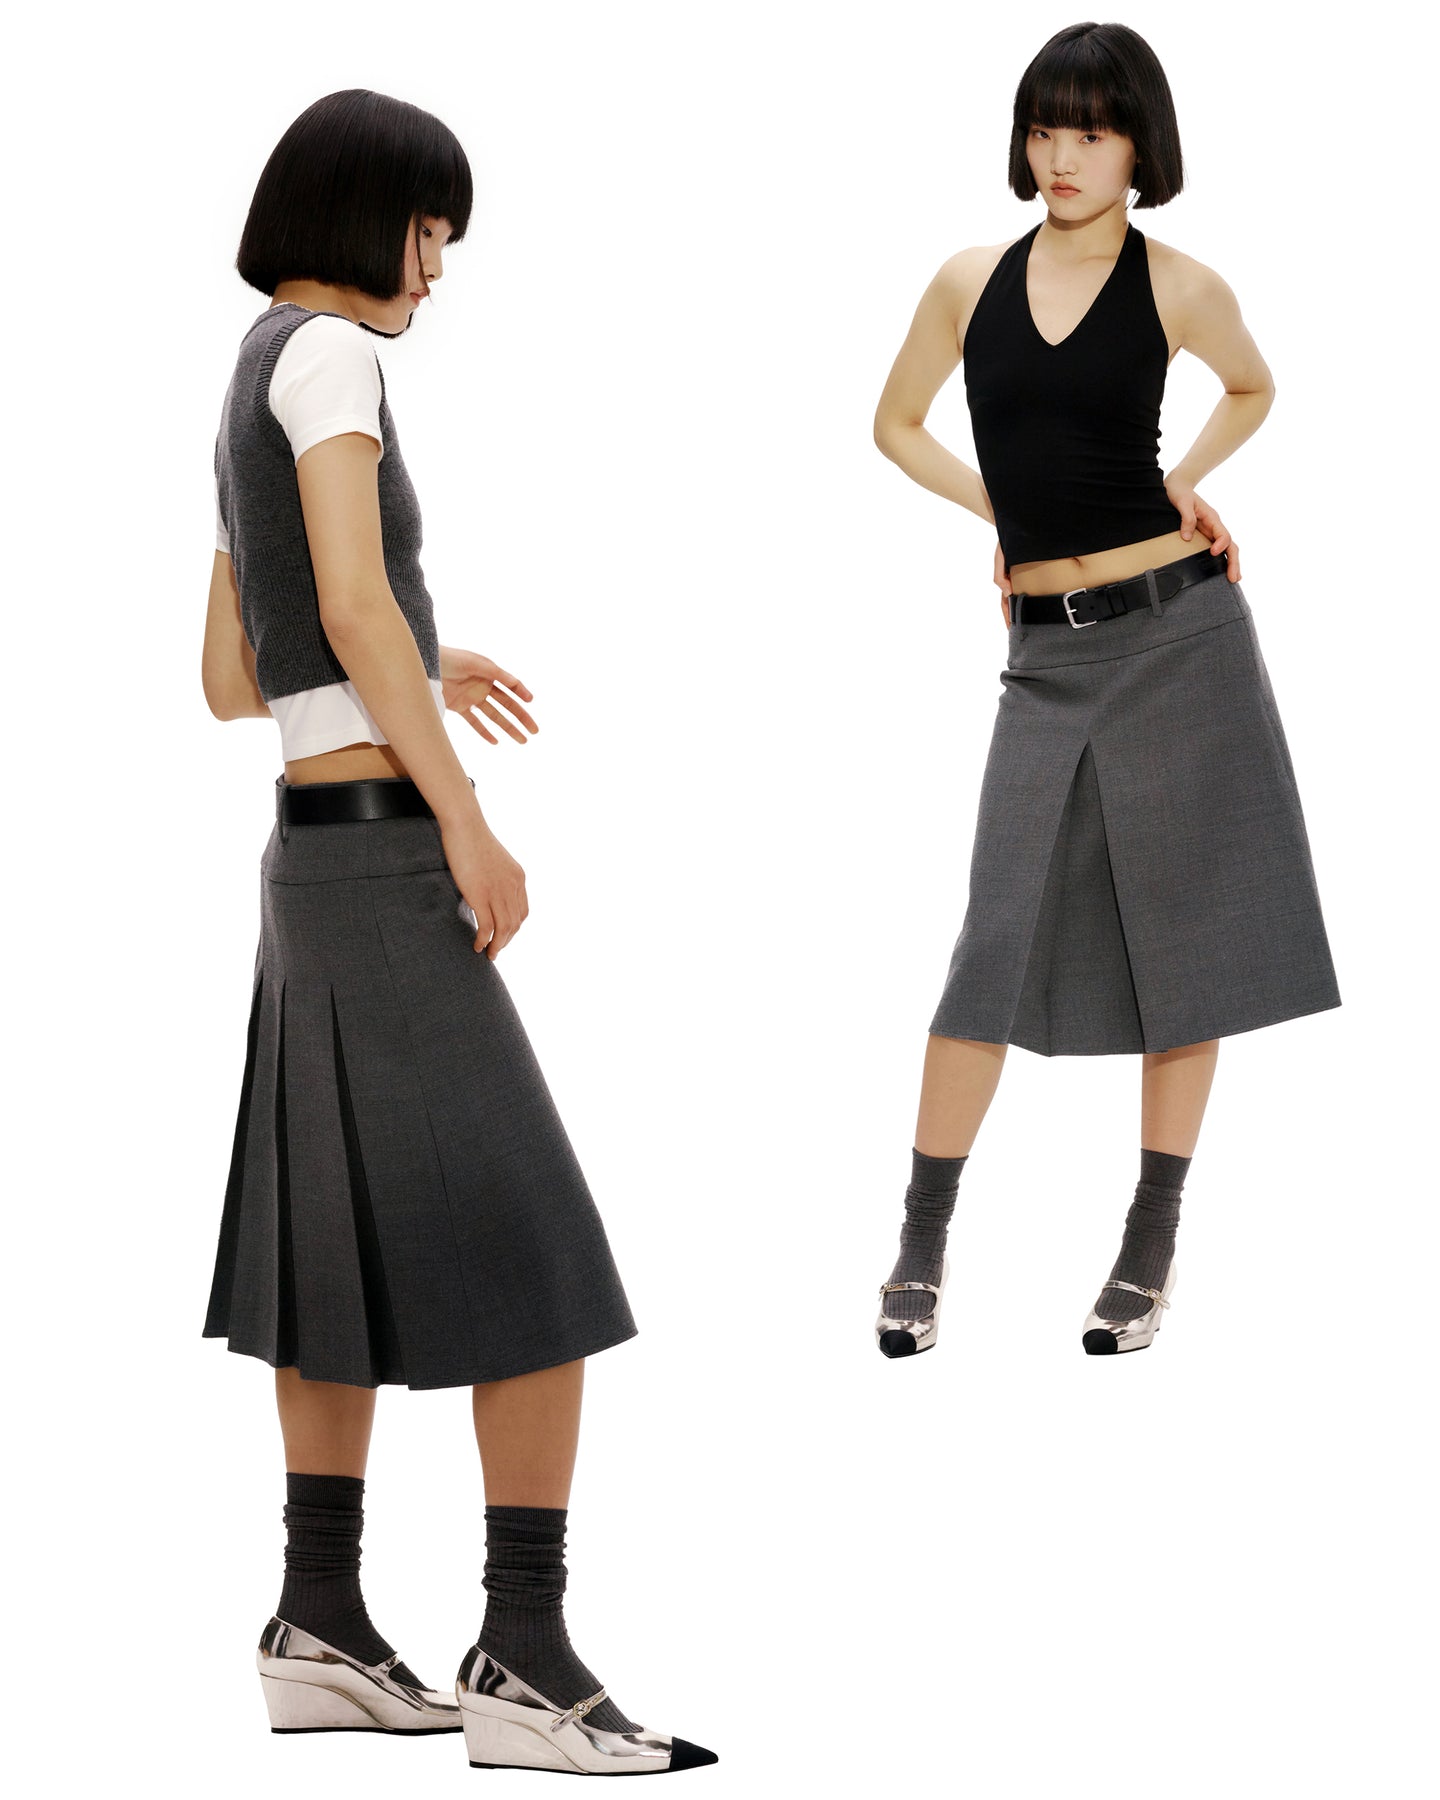 Knife Pleat Skirt [NY052-532-8-NAVY] - FlynnO'Hara Uniforms